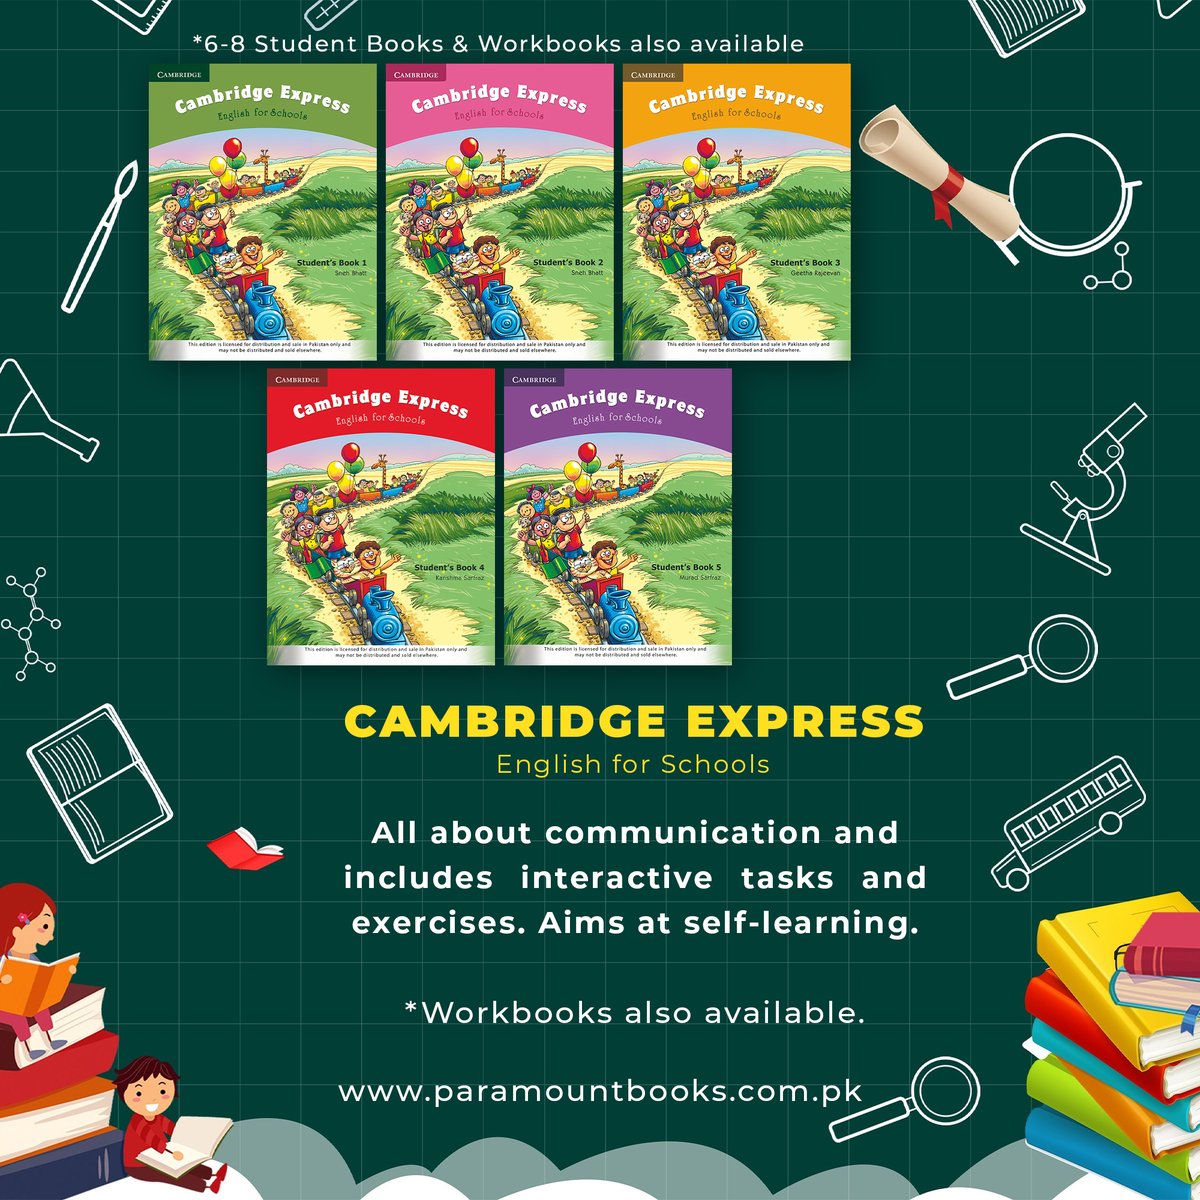 𝐂𝐚𝐦𝐛𝐫𝐢𝐝𝐠𝐞 𝐄𝐱𝐩𝐫𝐞𝐬𝐬 𝐒𝐭𝐮𝐝𝐞𝐧𝐭 𝐁𝐨𝐨𝐤𝐬

𝐀𝐯𝐚𝐢𝐥𝐚𝐛𝐥𝐞 𝐚𝐭: paramountbooks.com.pk/shop/?s=cambri…

#CampusExpress #StudentBooks #LanguageSkills #CommunicationSkills #InteractiveLessons #RealLifeContexts